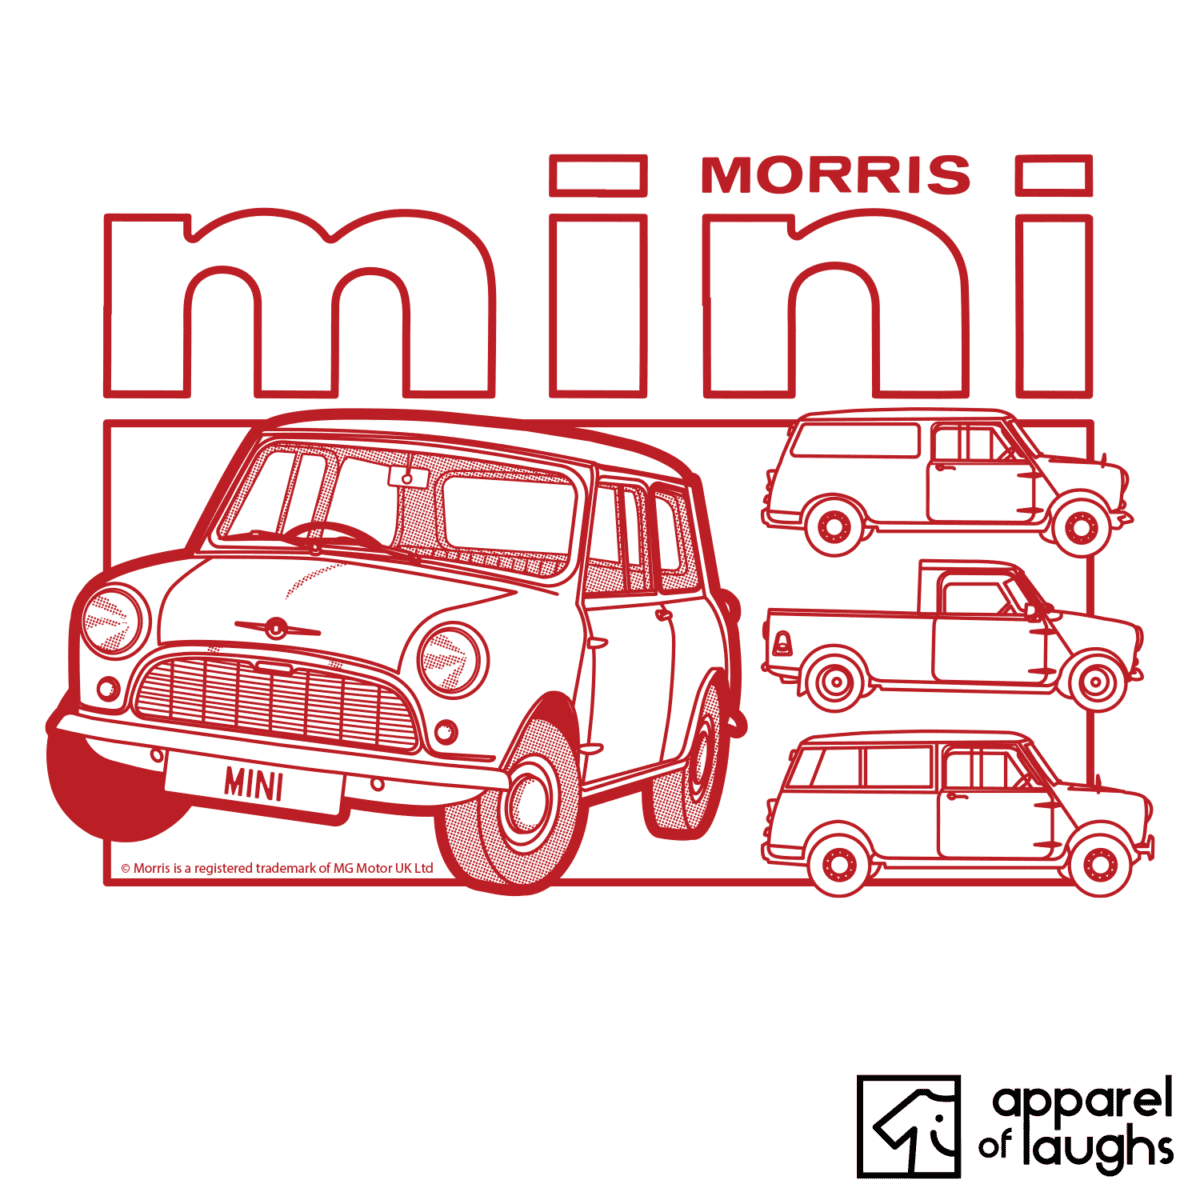 Morris Mini Cooper Car Brand Vintage Retro British Motoring Heritage T-Shirt Design White